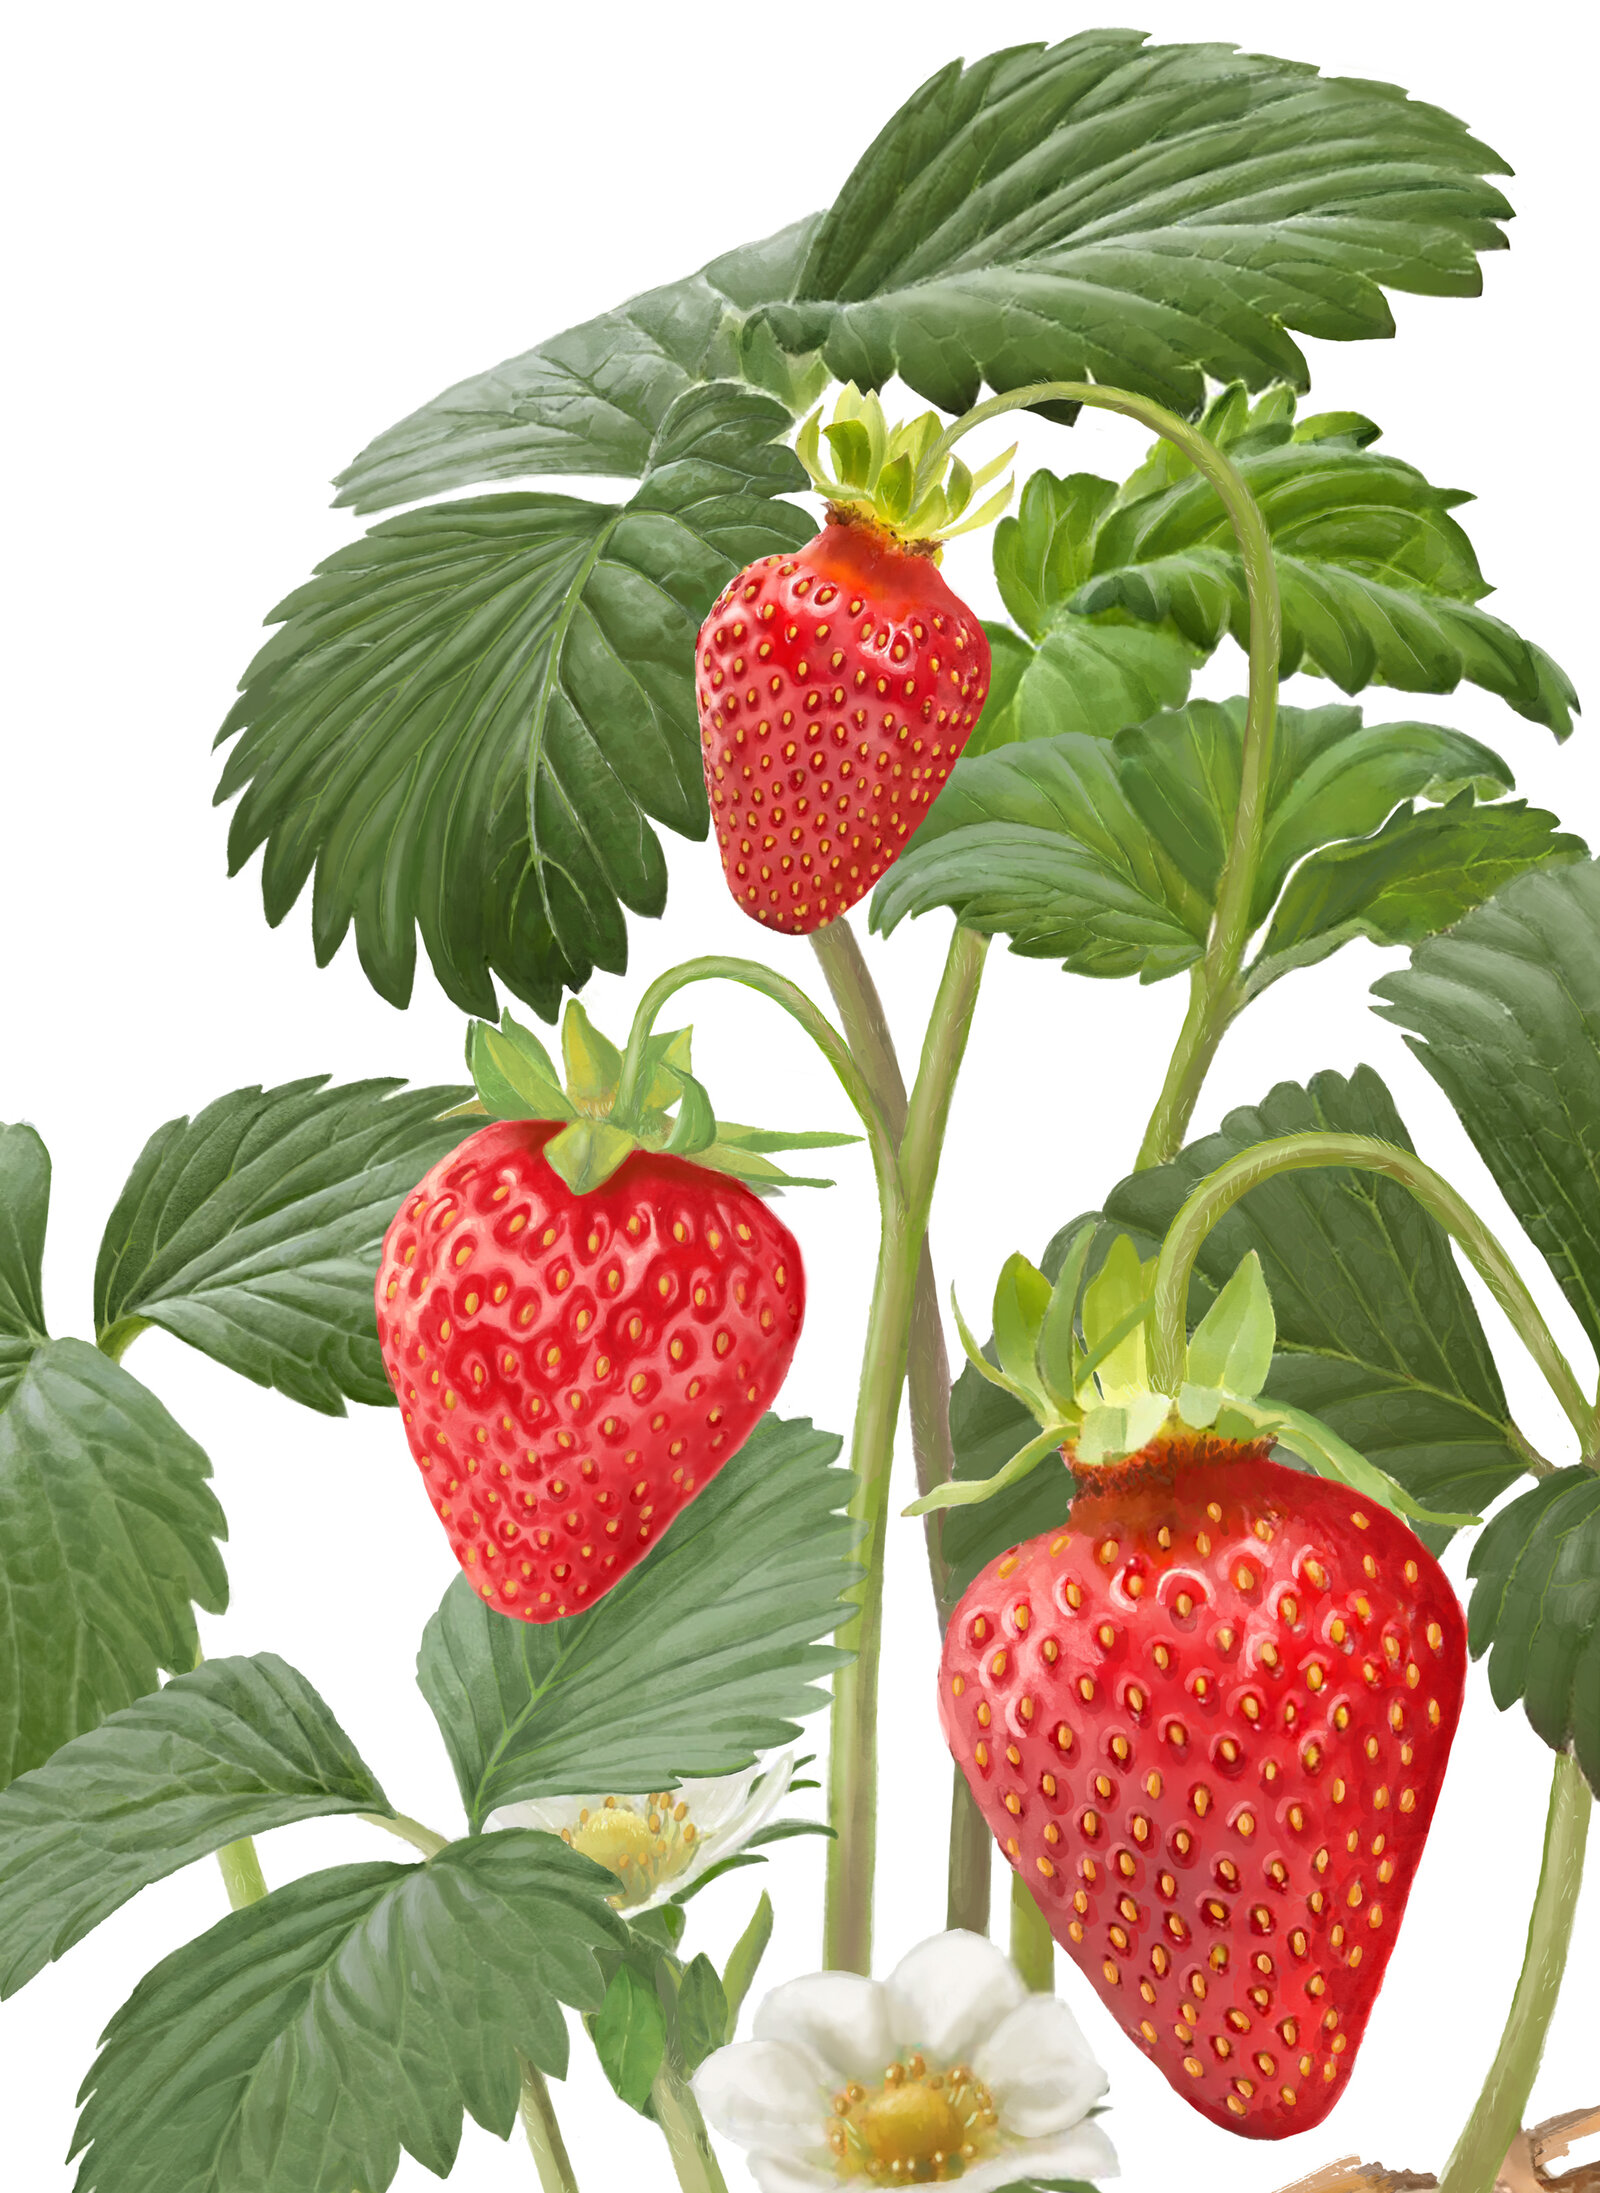 oculus-illustration-pflanzenillustration-hauert-verpackungsdesign-erdbeere